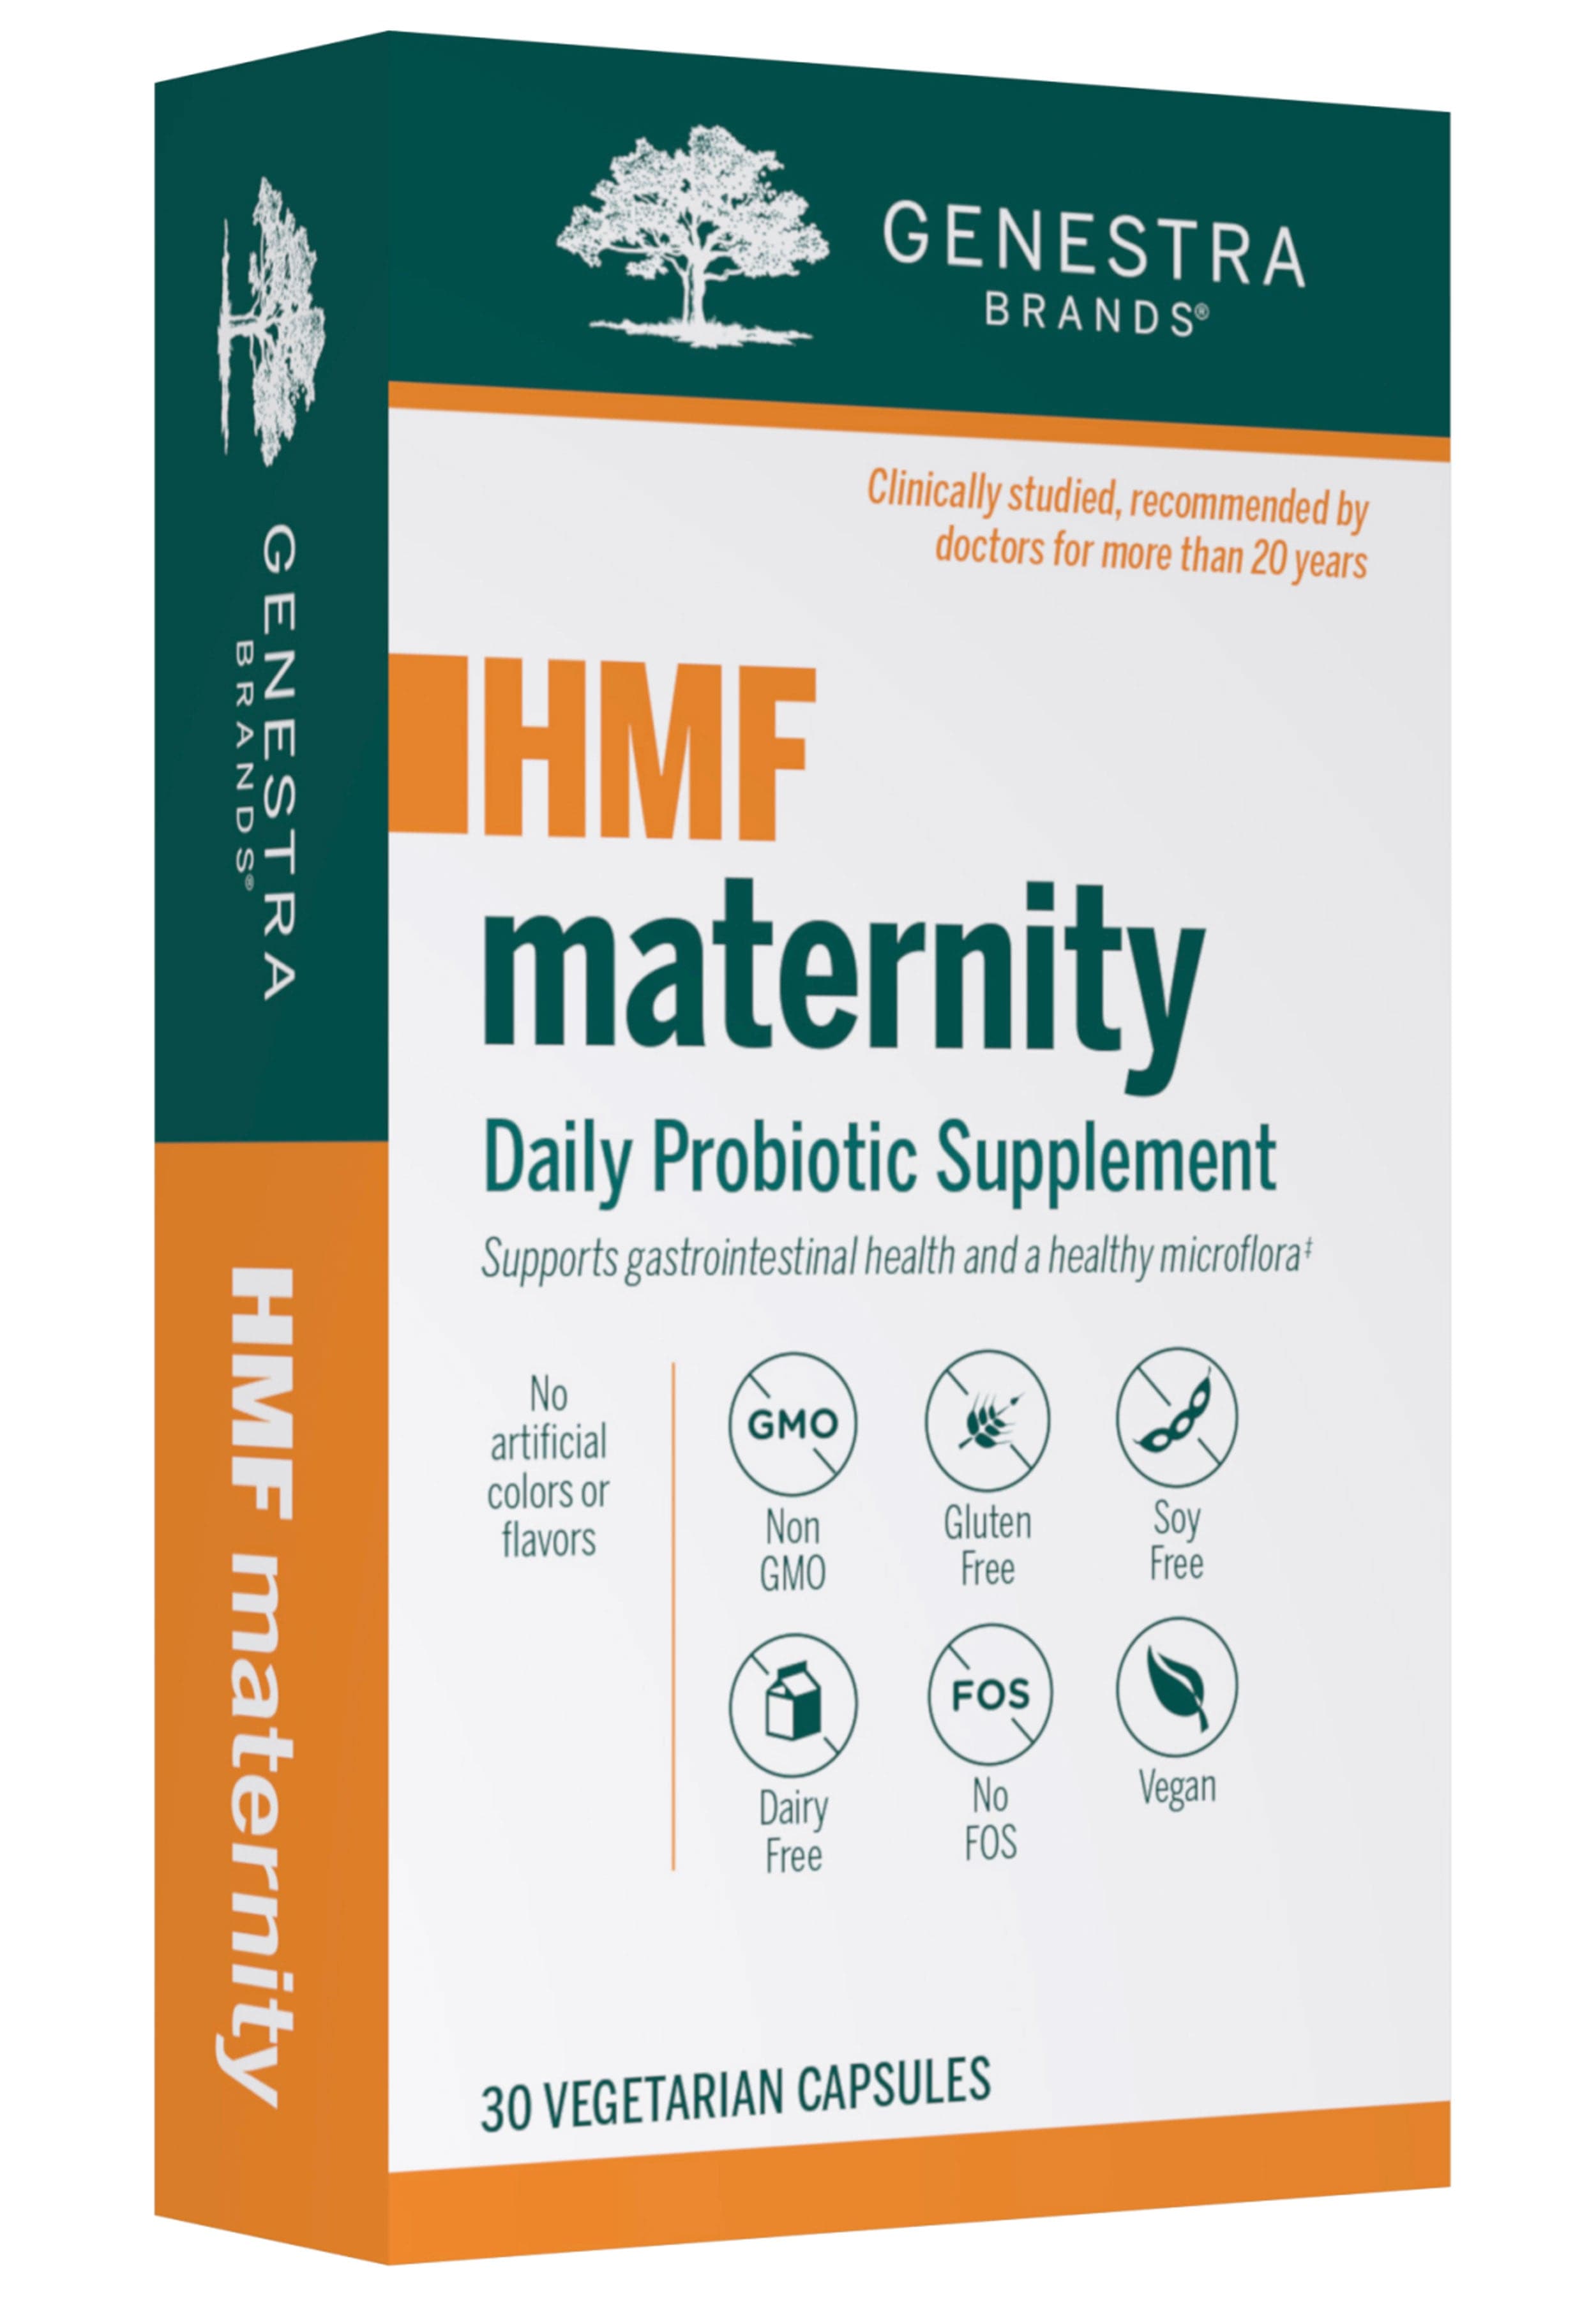 Genestra Brands HMF Maternity